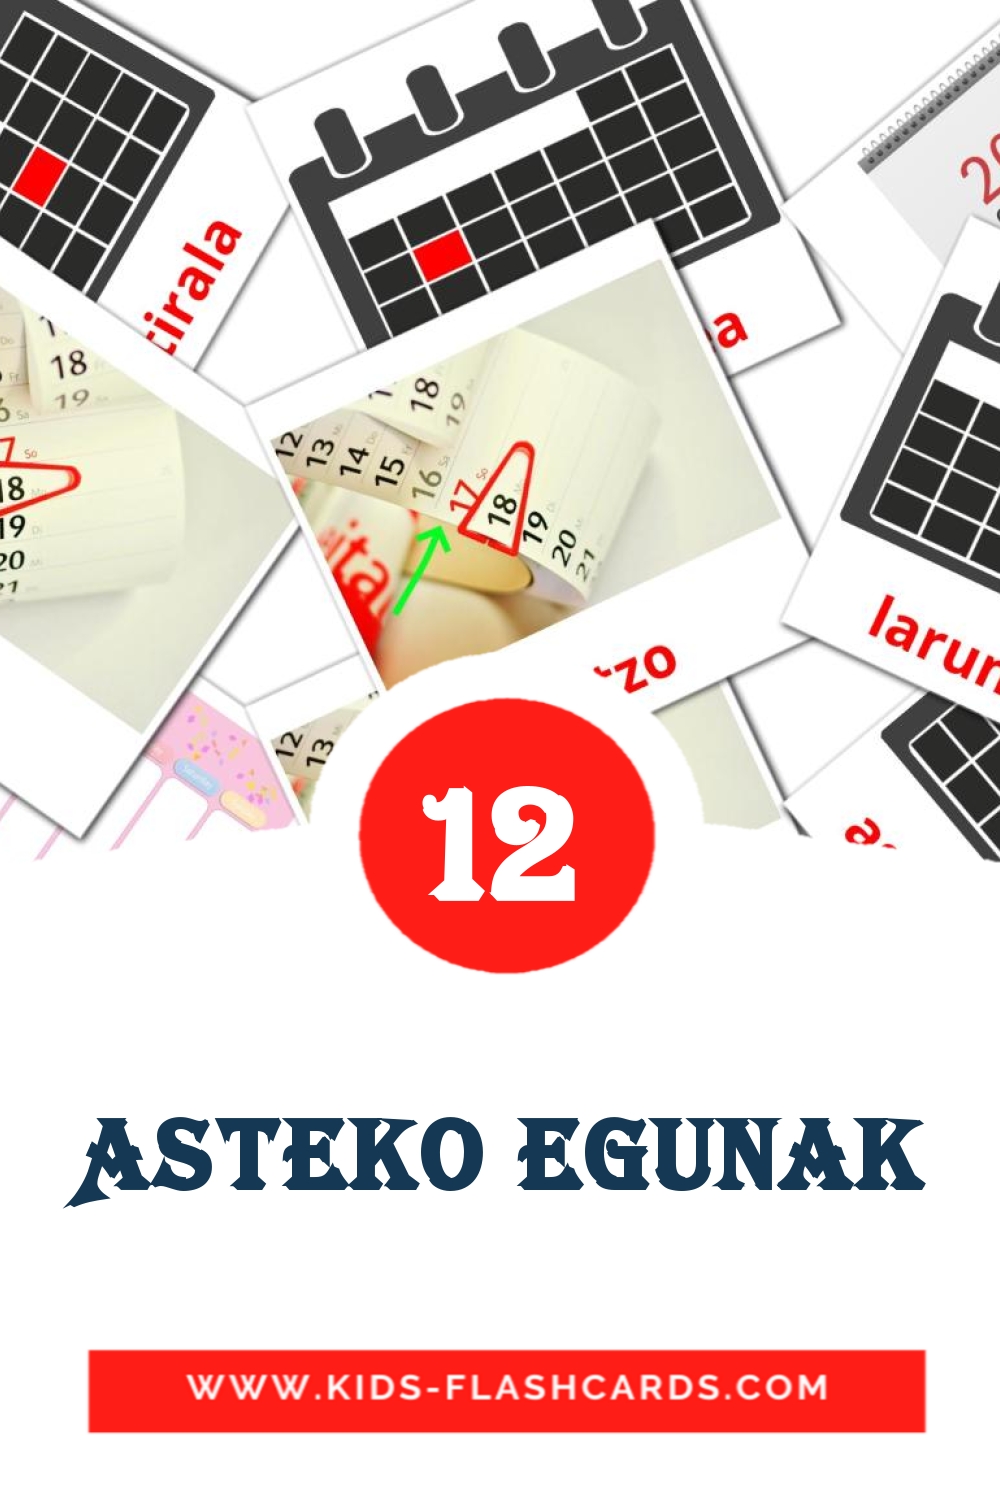 12 Asteko egunak Picture Cards for Kindergarden in basque